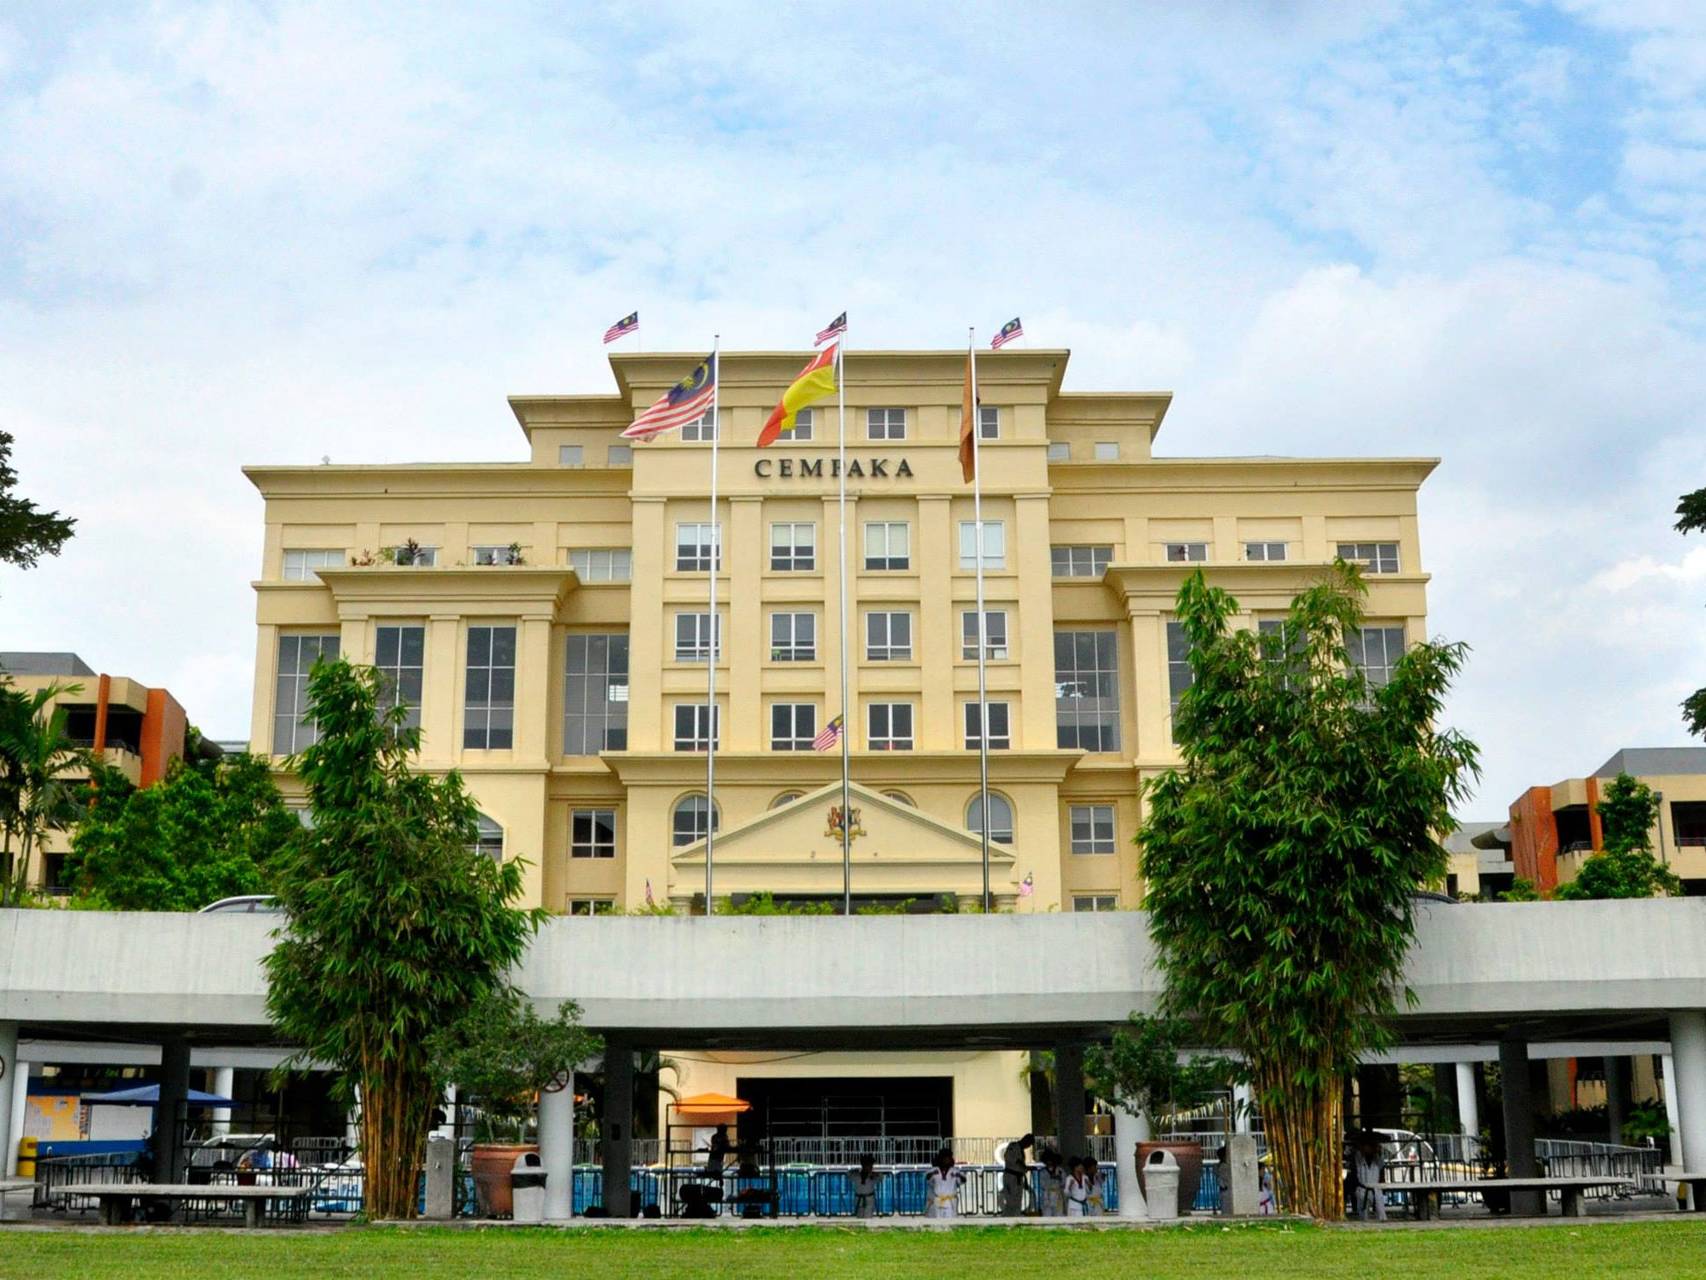 Exterior of the Sri Cempaka School in Selangor, Malaysia.